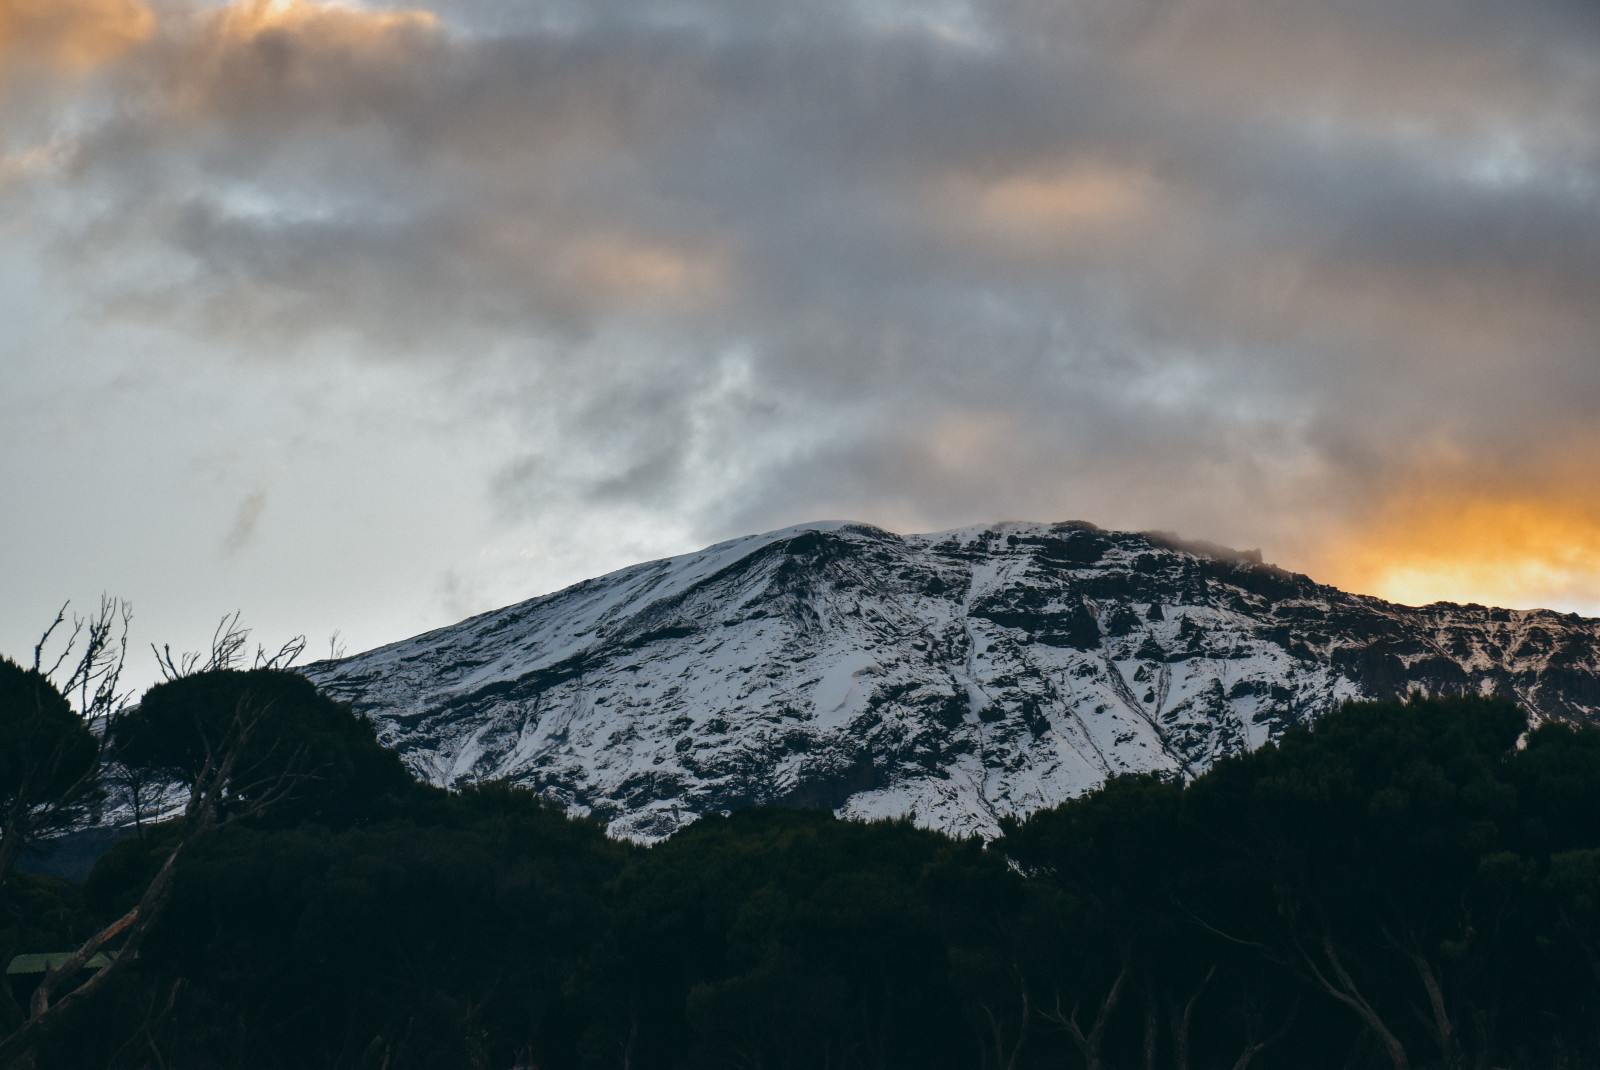 snow capped mount kilimanjaro at sunrise with orange and white skies